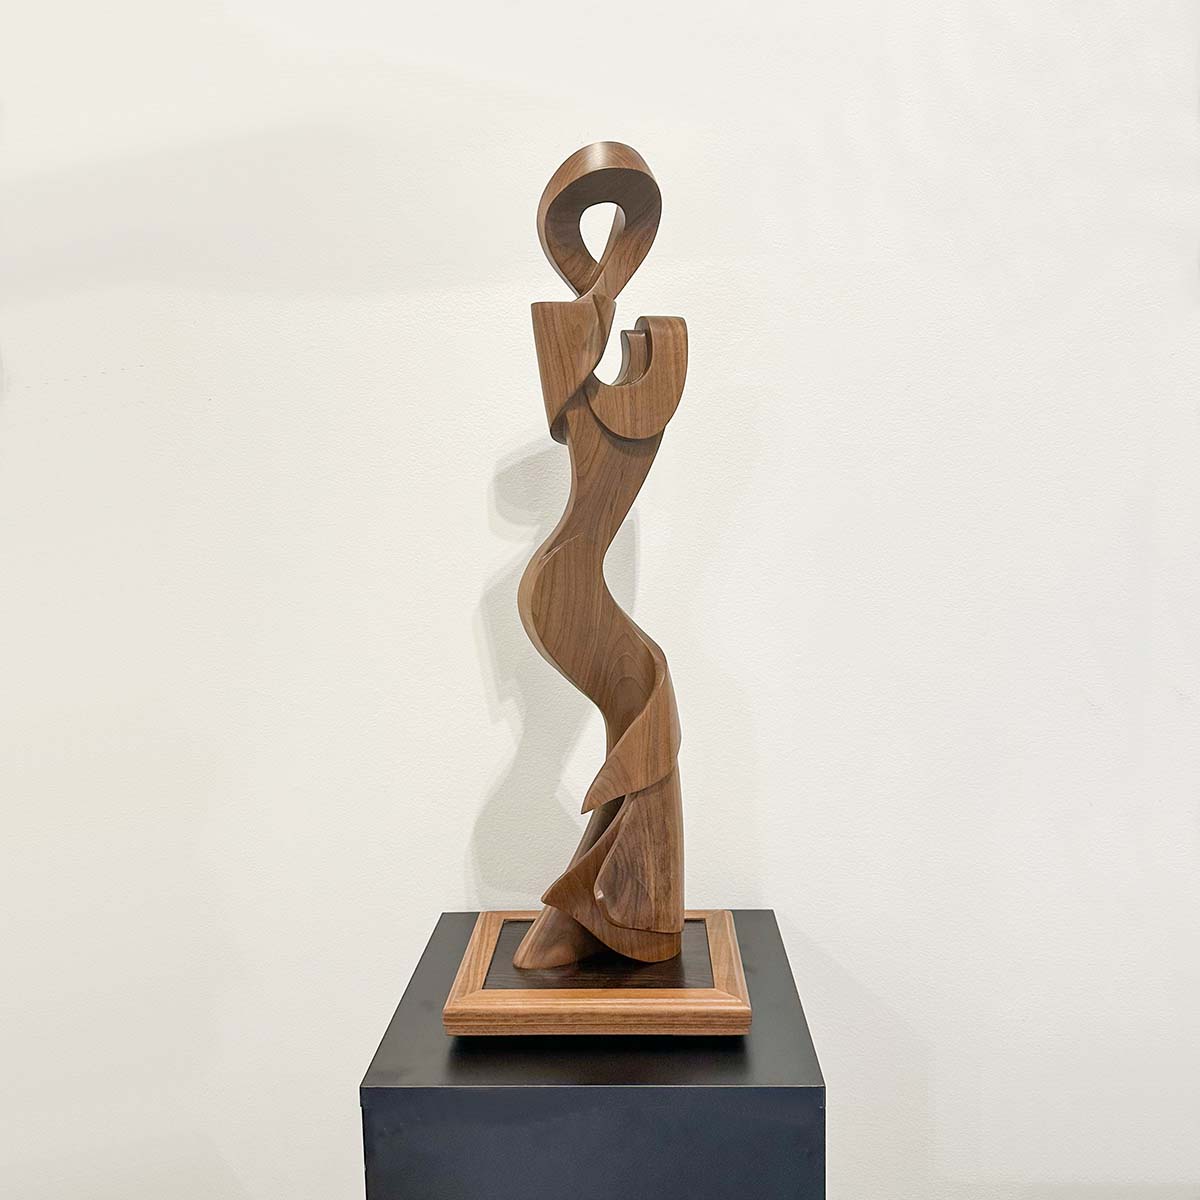 Contemporary Sculpture. Title: Flamenco, Black Walnut, 30 x 7 x 6 by Canadian sculptor Serge Mozhnevsky.